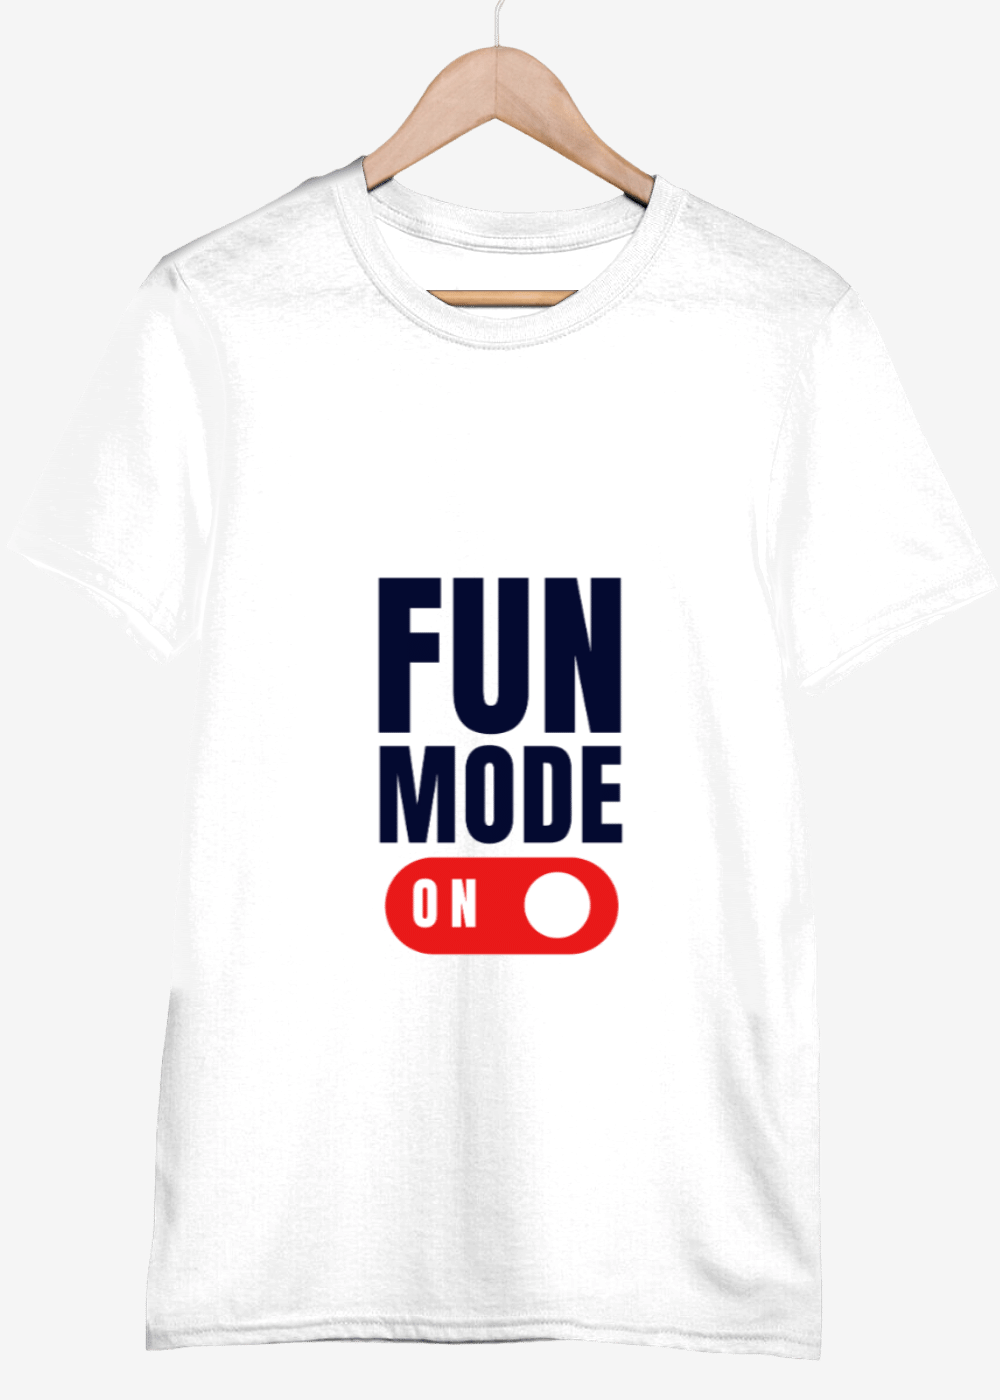 Men Fun Mode Best T-Shirt: Turn Up the Fun in Style